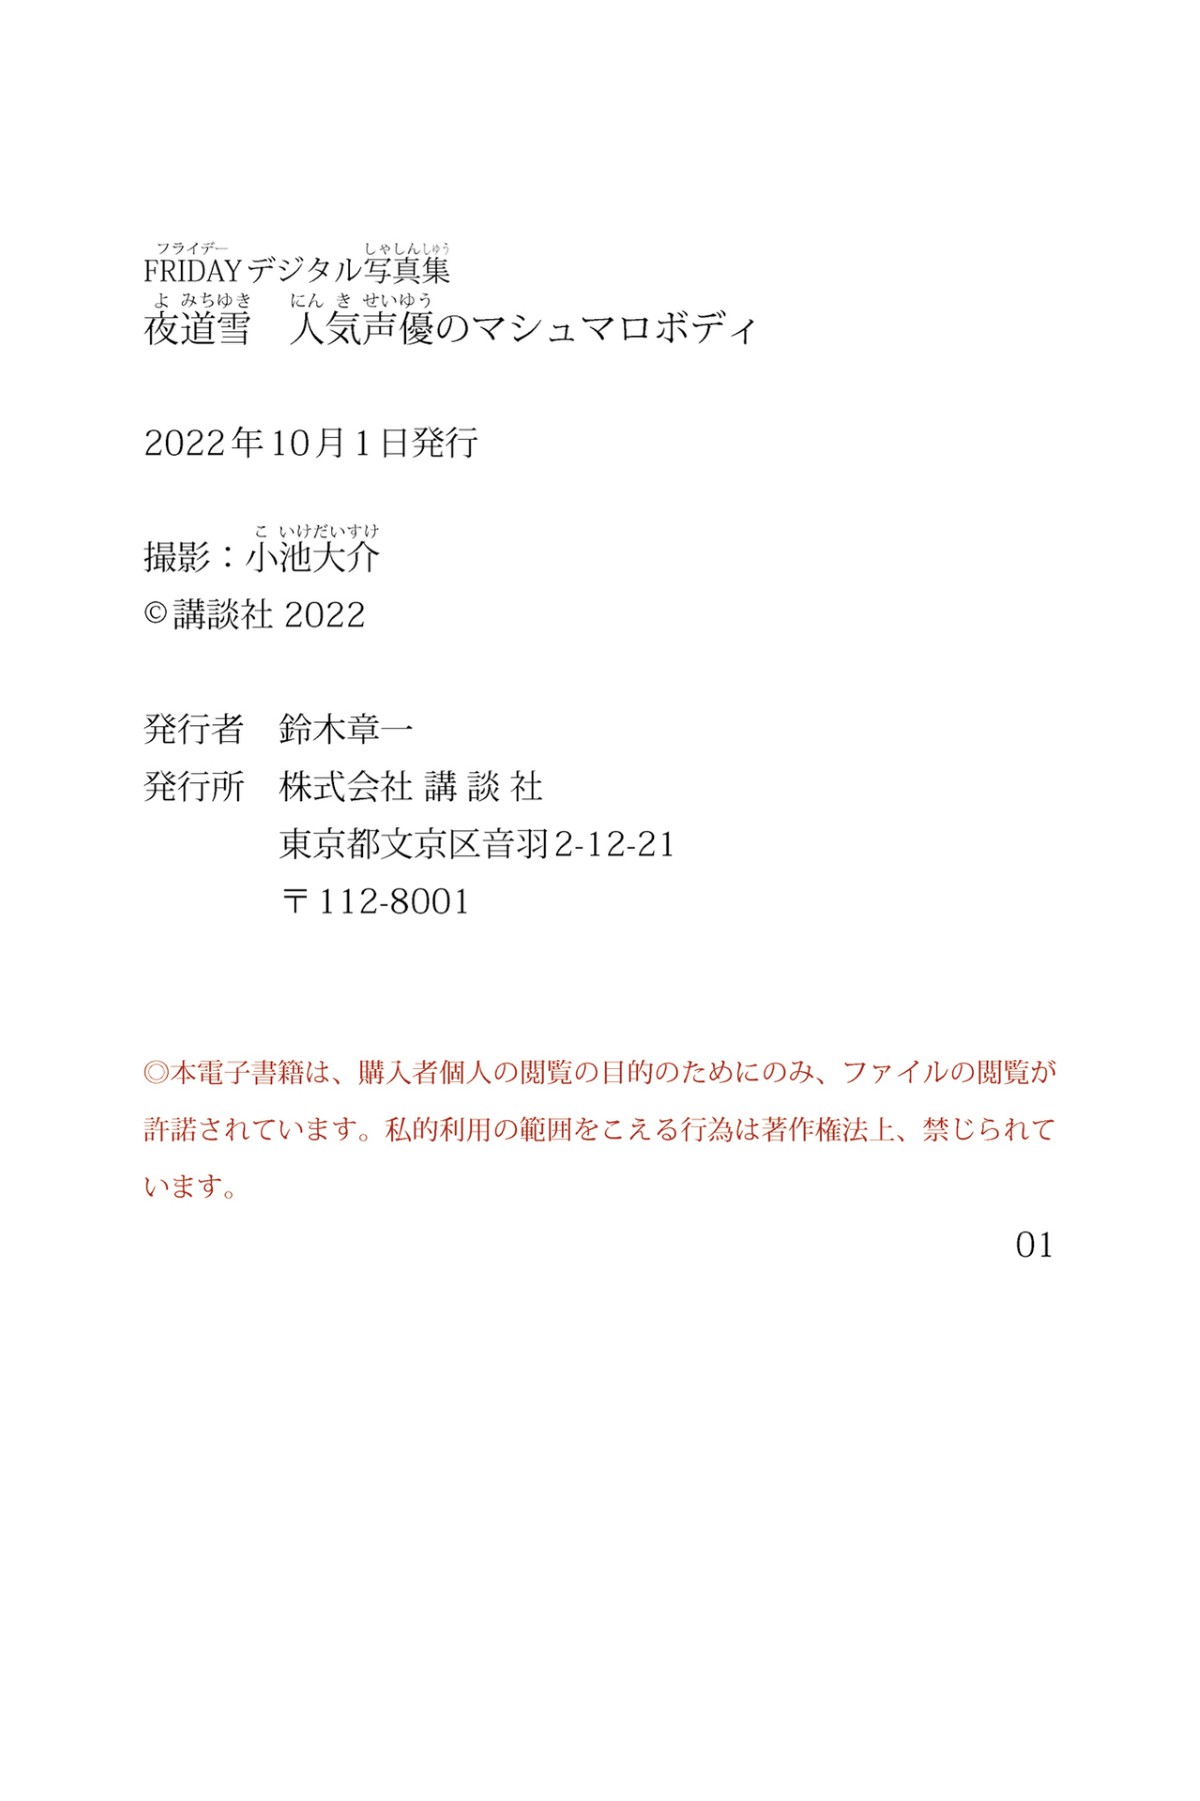 Photobook 01 01 2021 Yomichi Yuki 夜道雪 Marshmallow Body Of A Popular Voice Actor Part 2 0069 9773171374.jpg